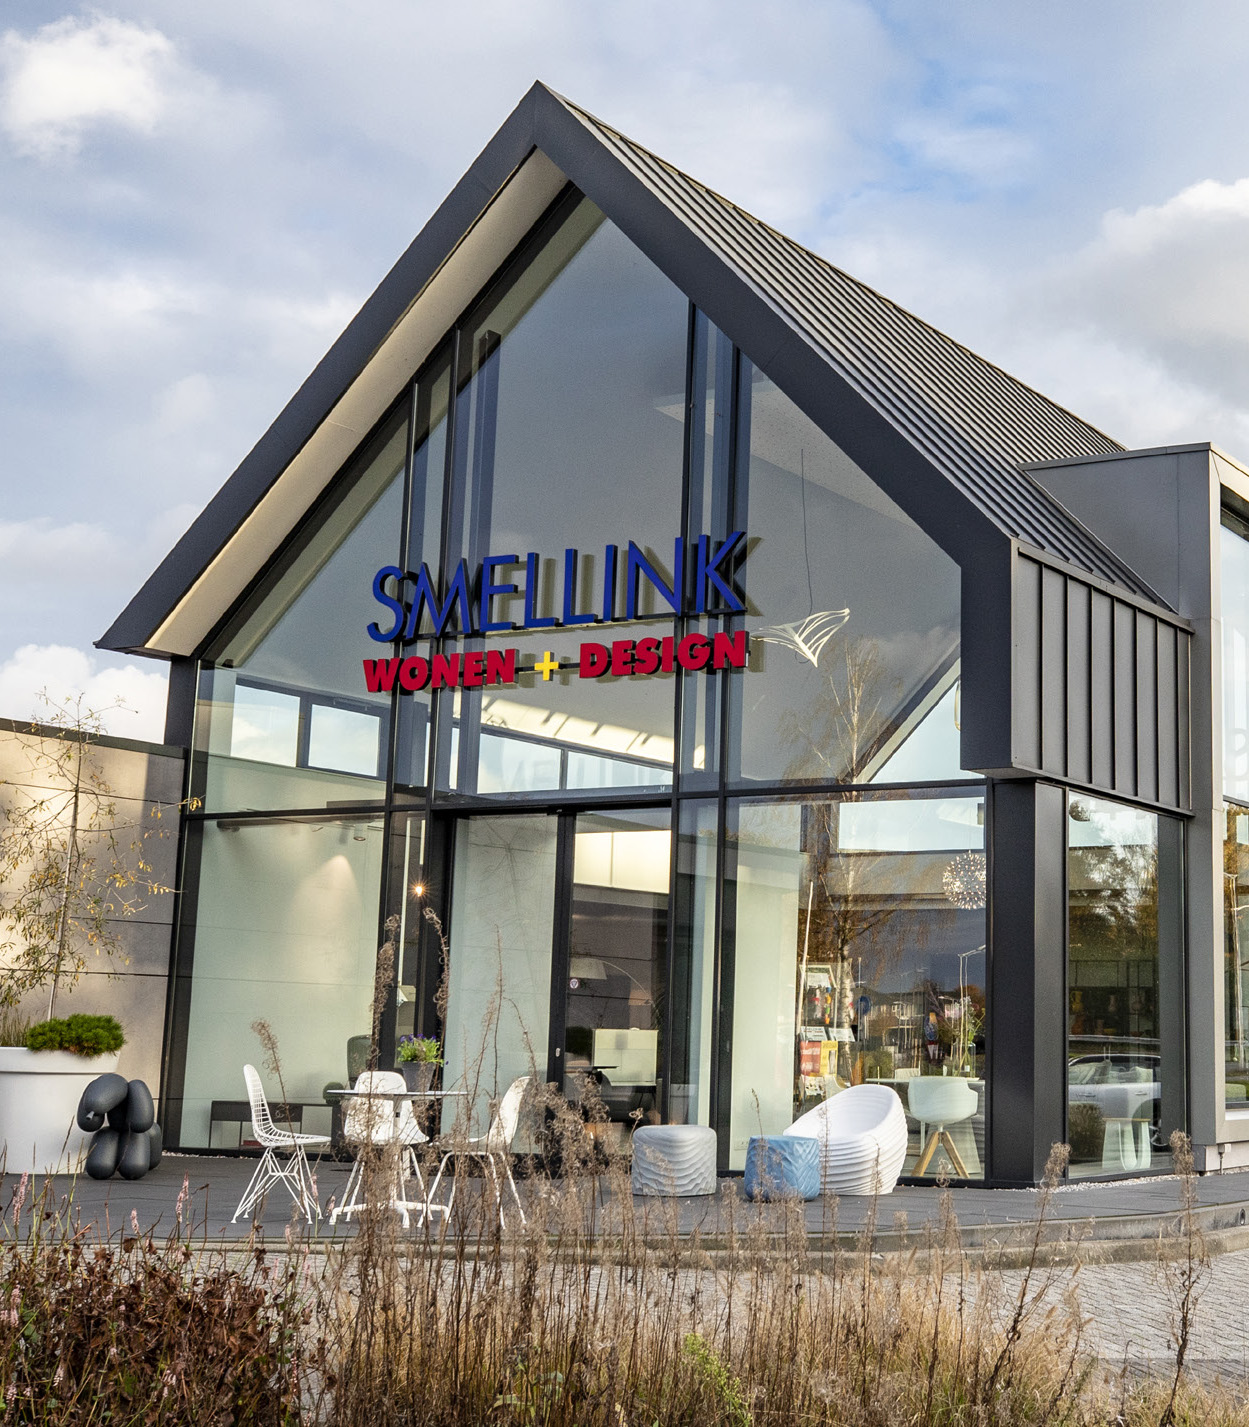 Smellink Wonen en Design